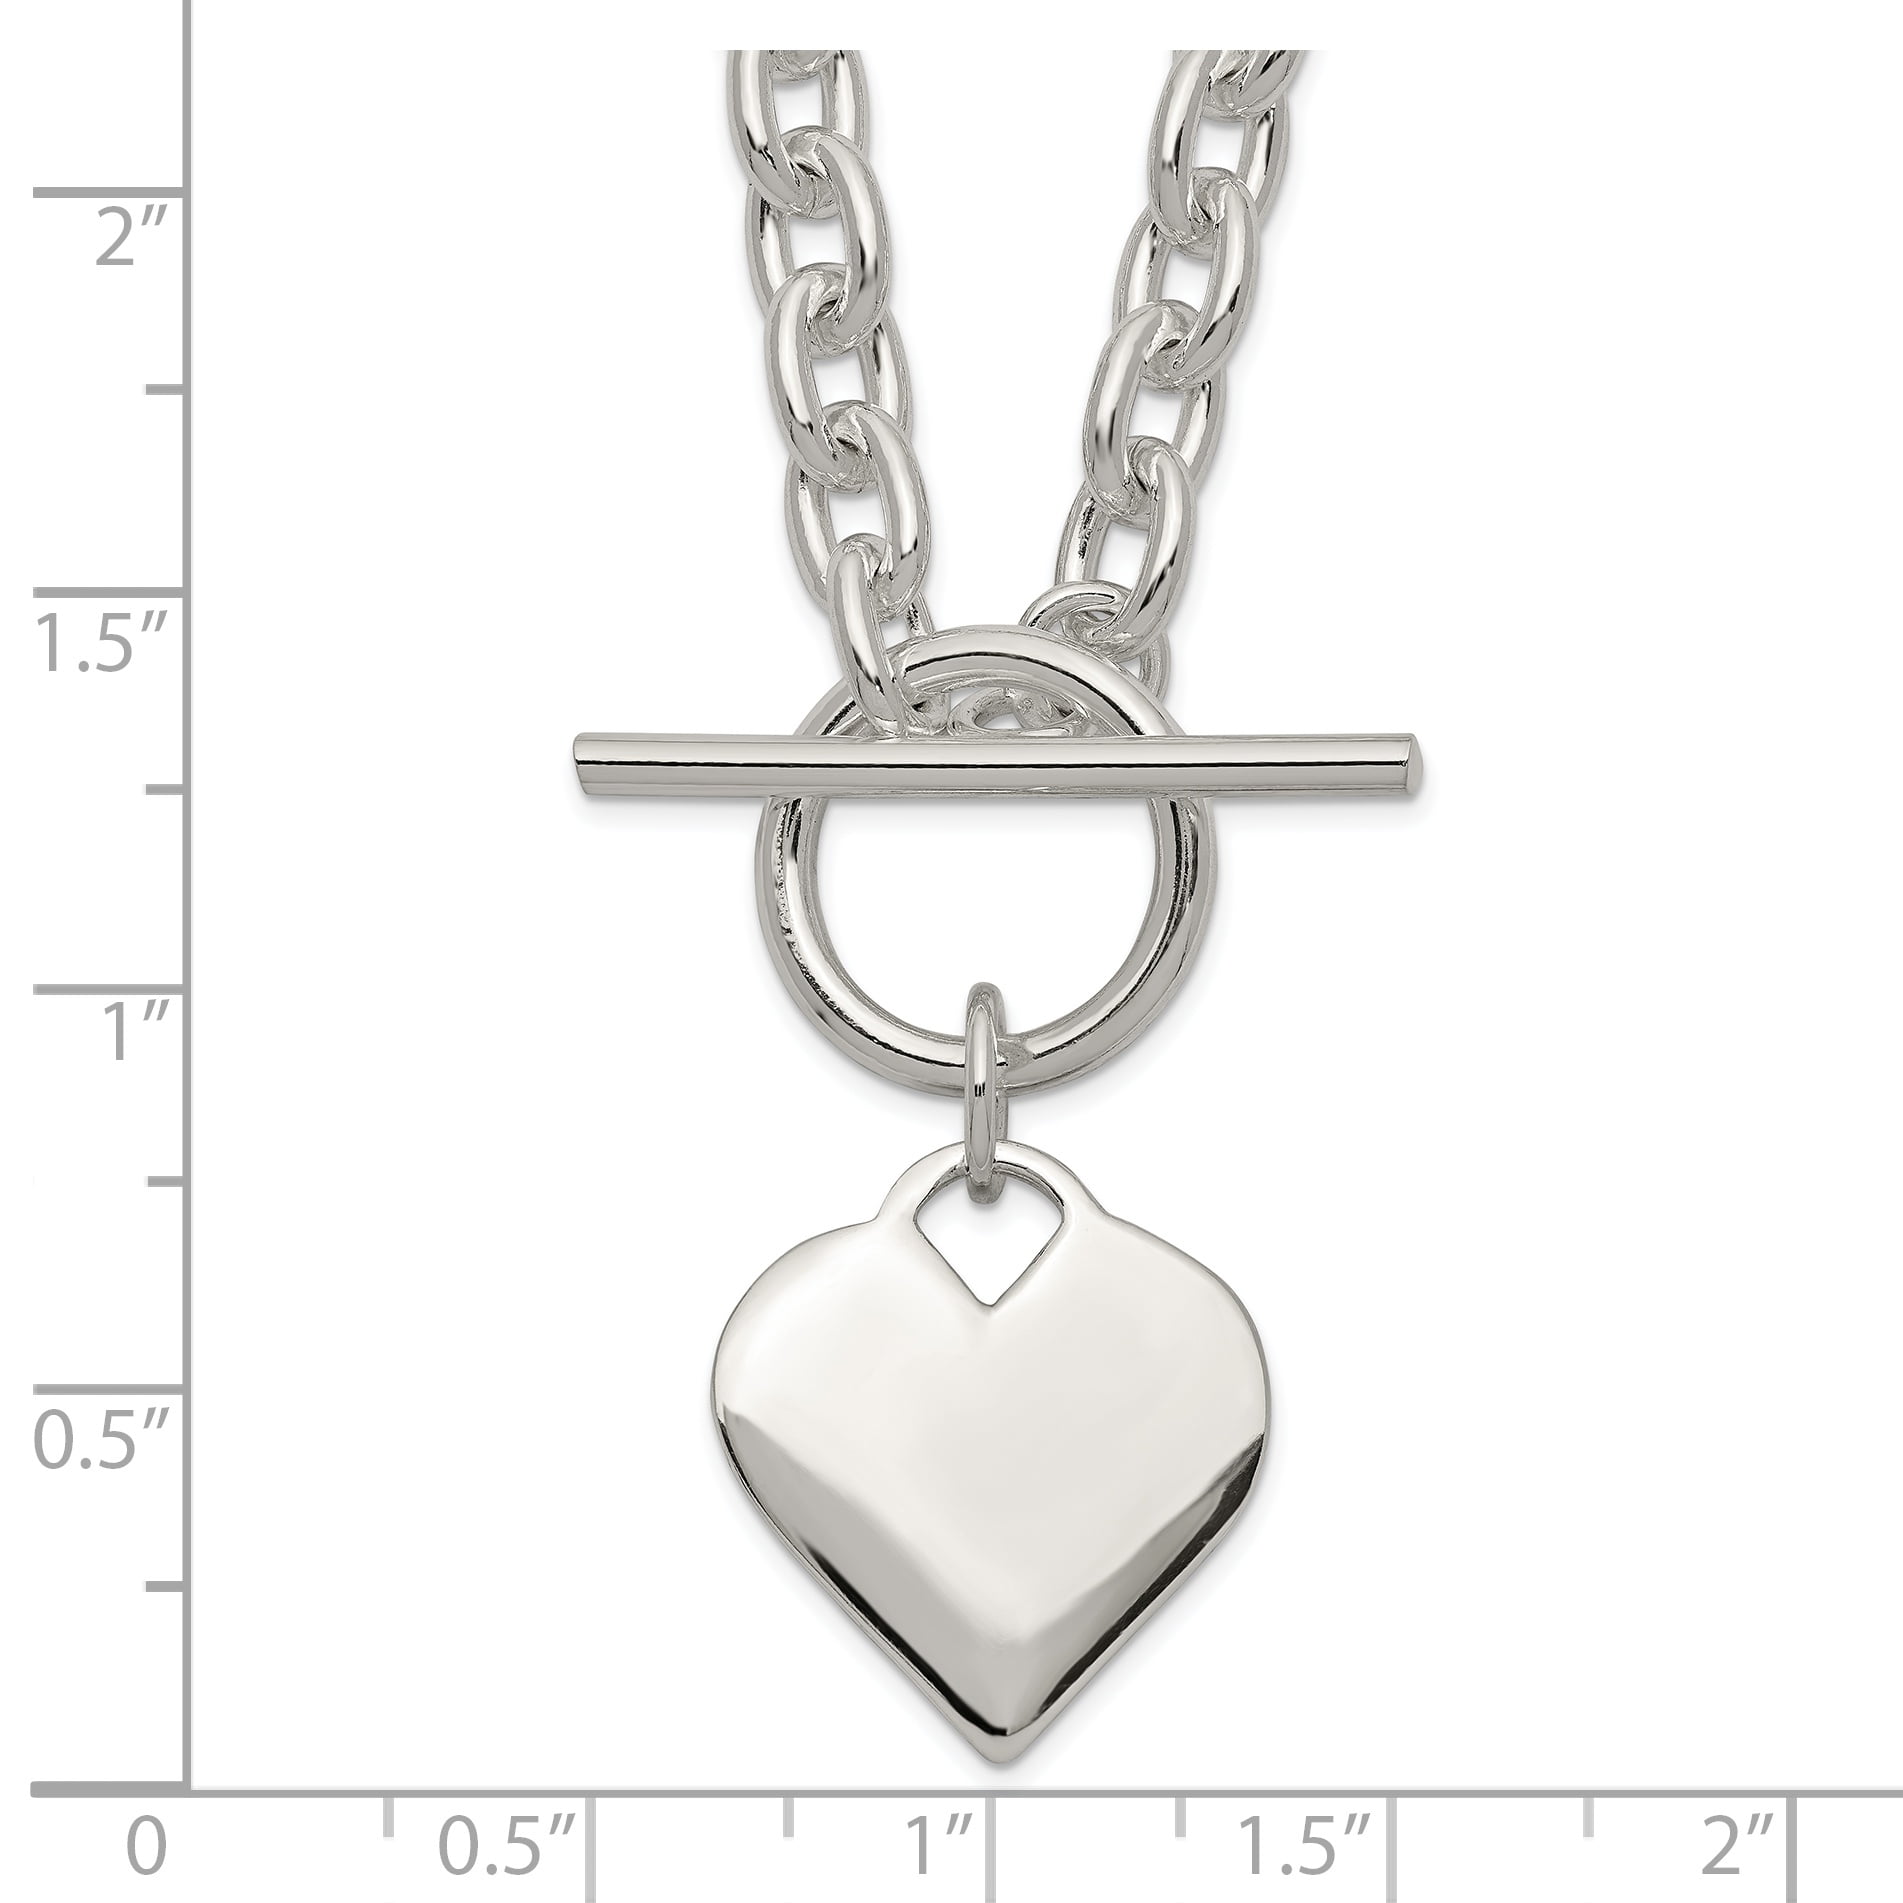 Silver T-Bar Necklace and Bracelet Gift Set